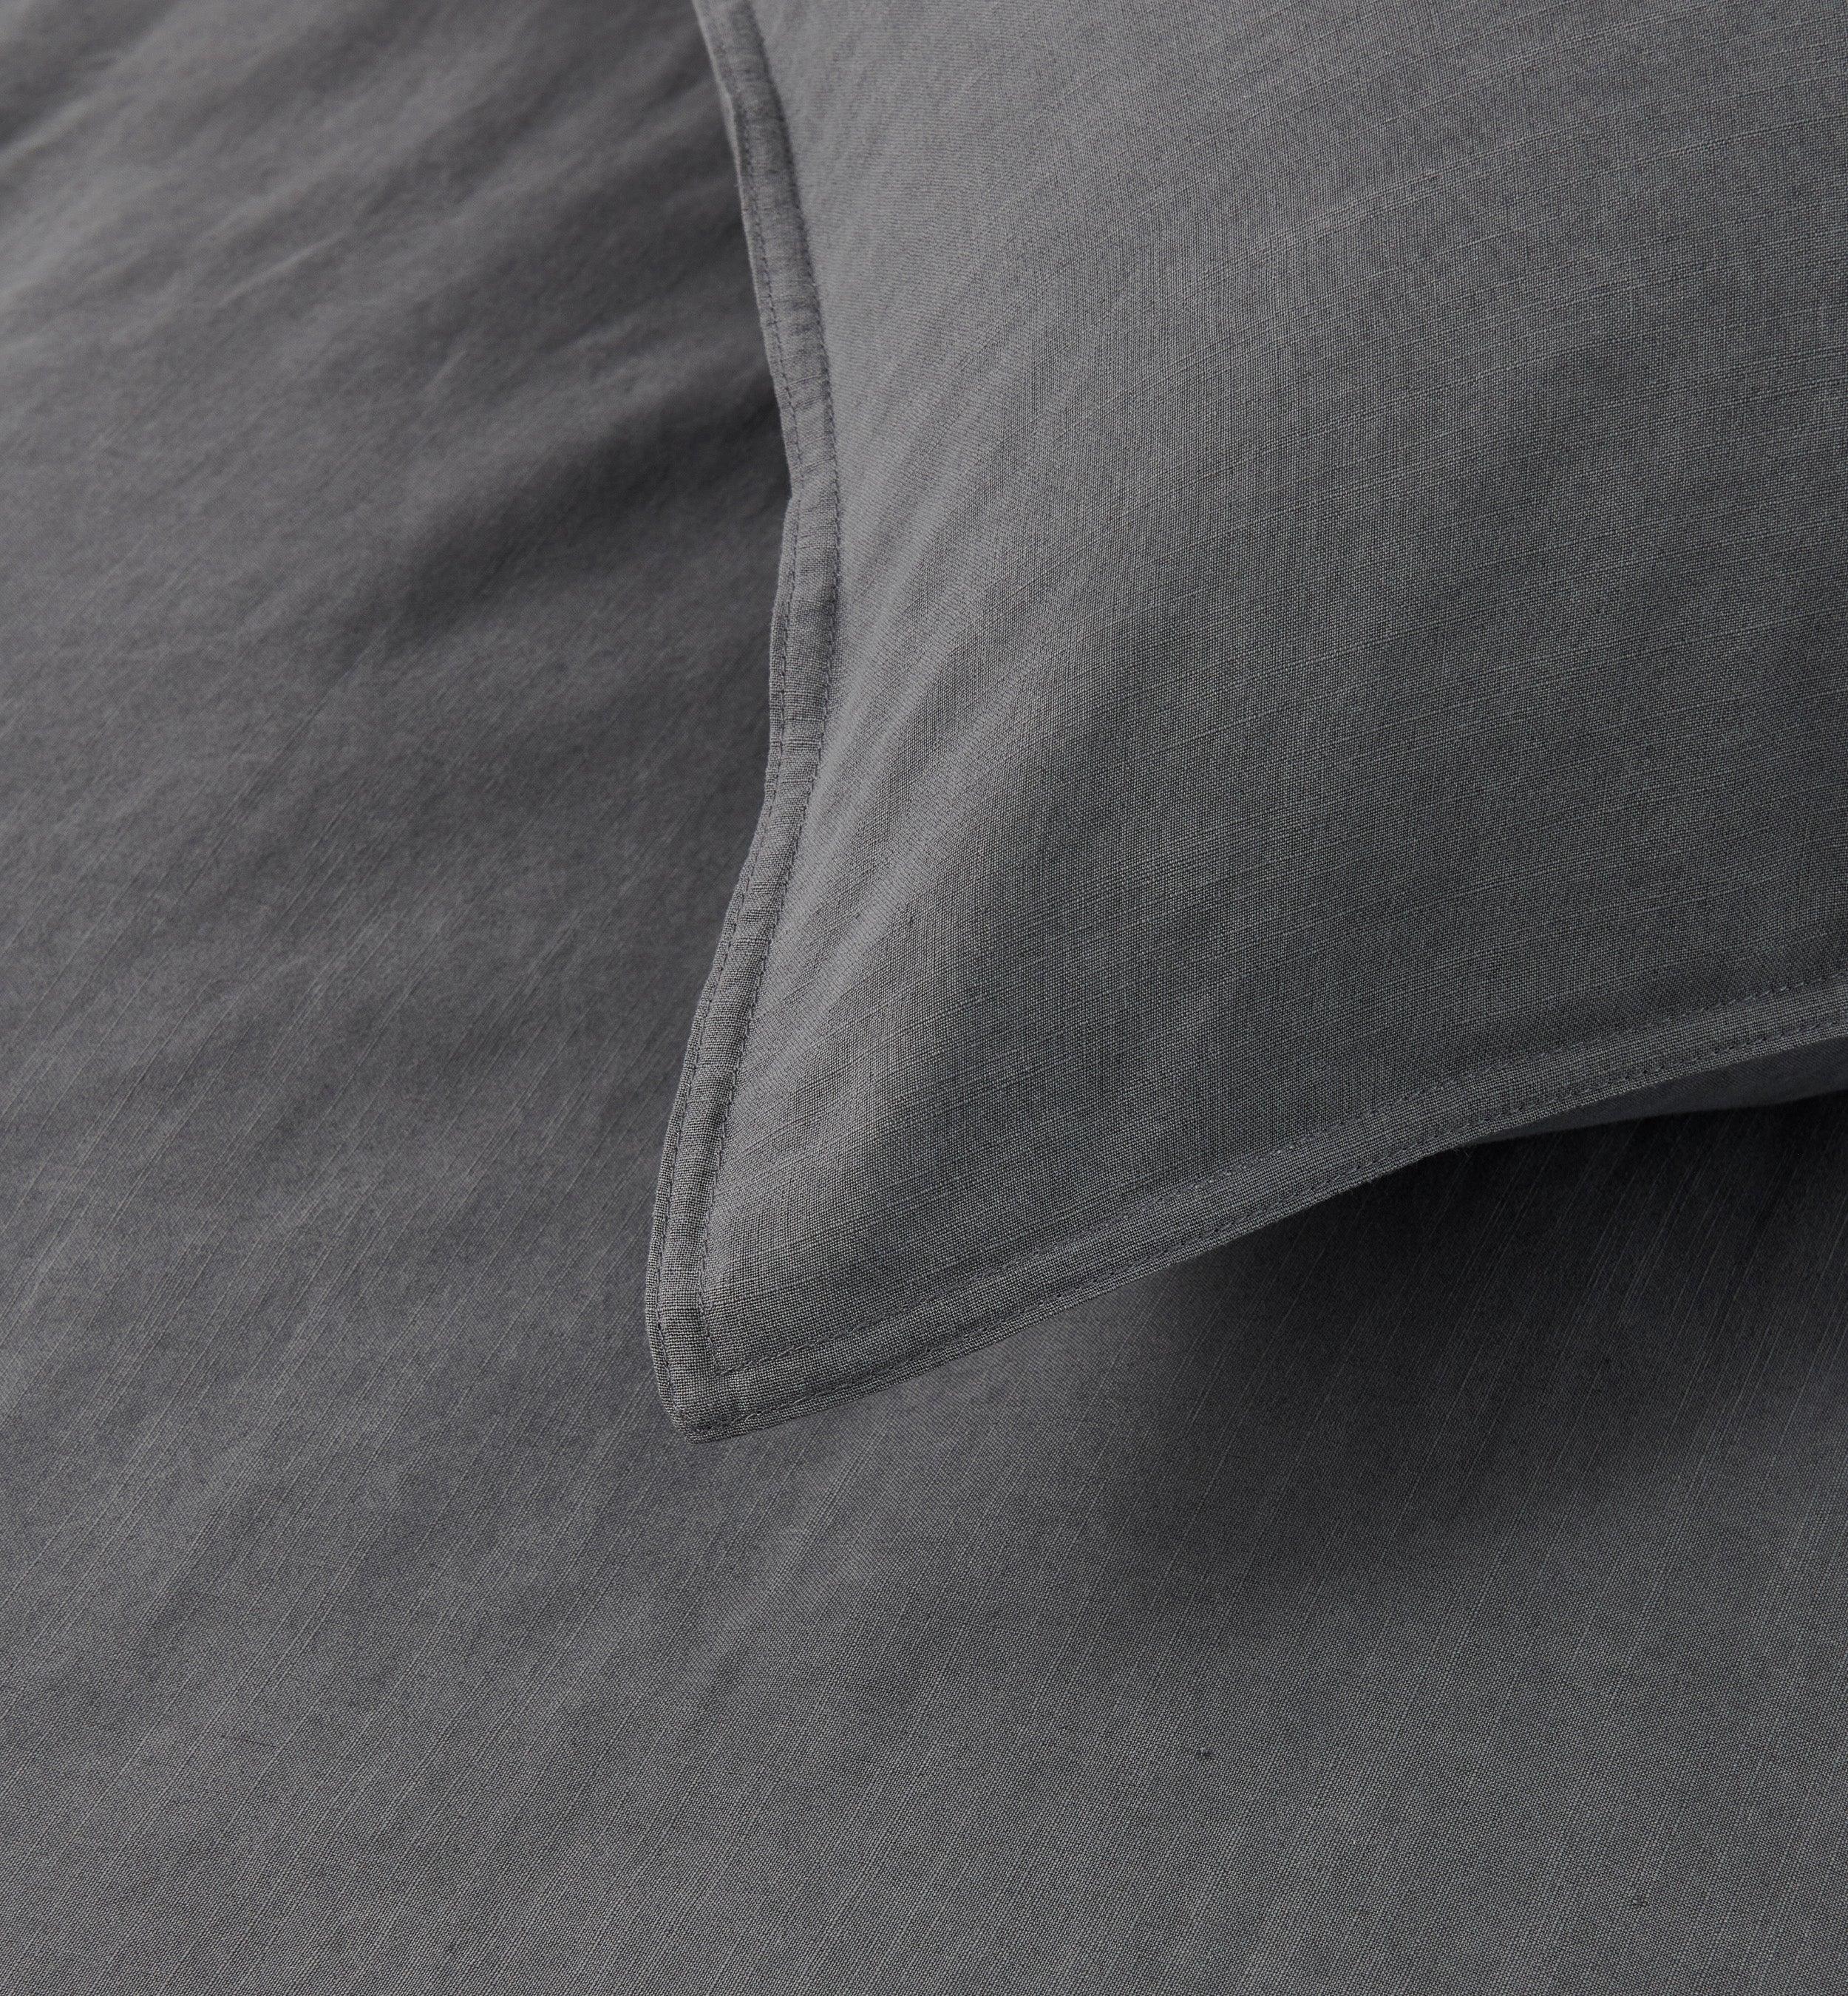 Linen Lyocell Sheet Set - Double Stitch By Bedsure